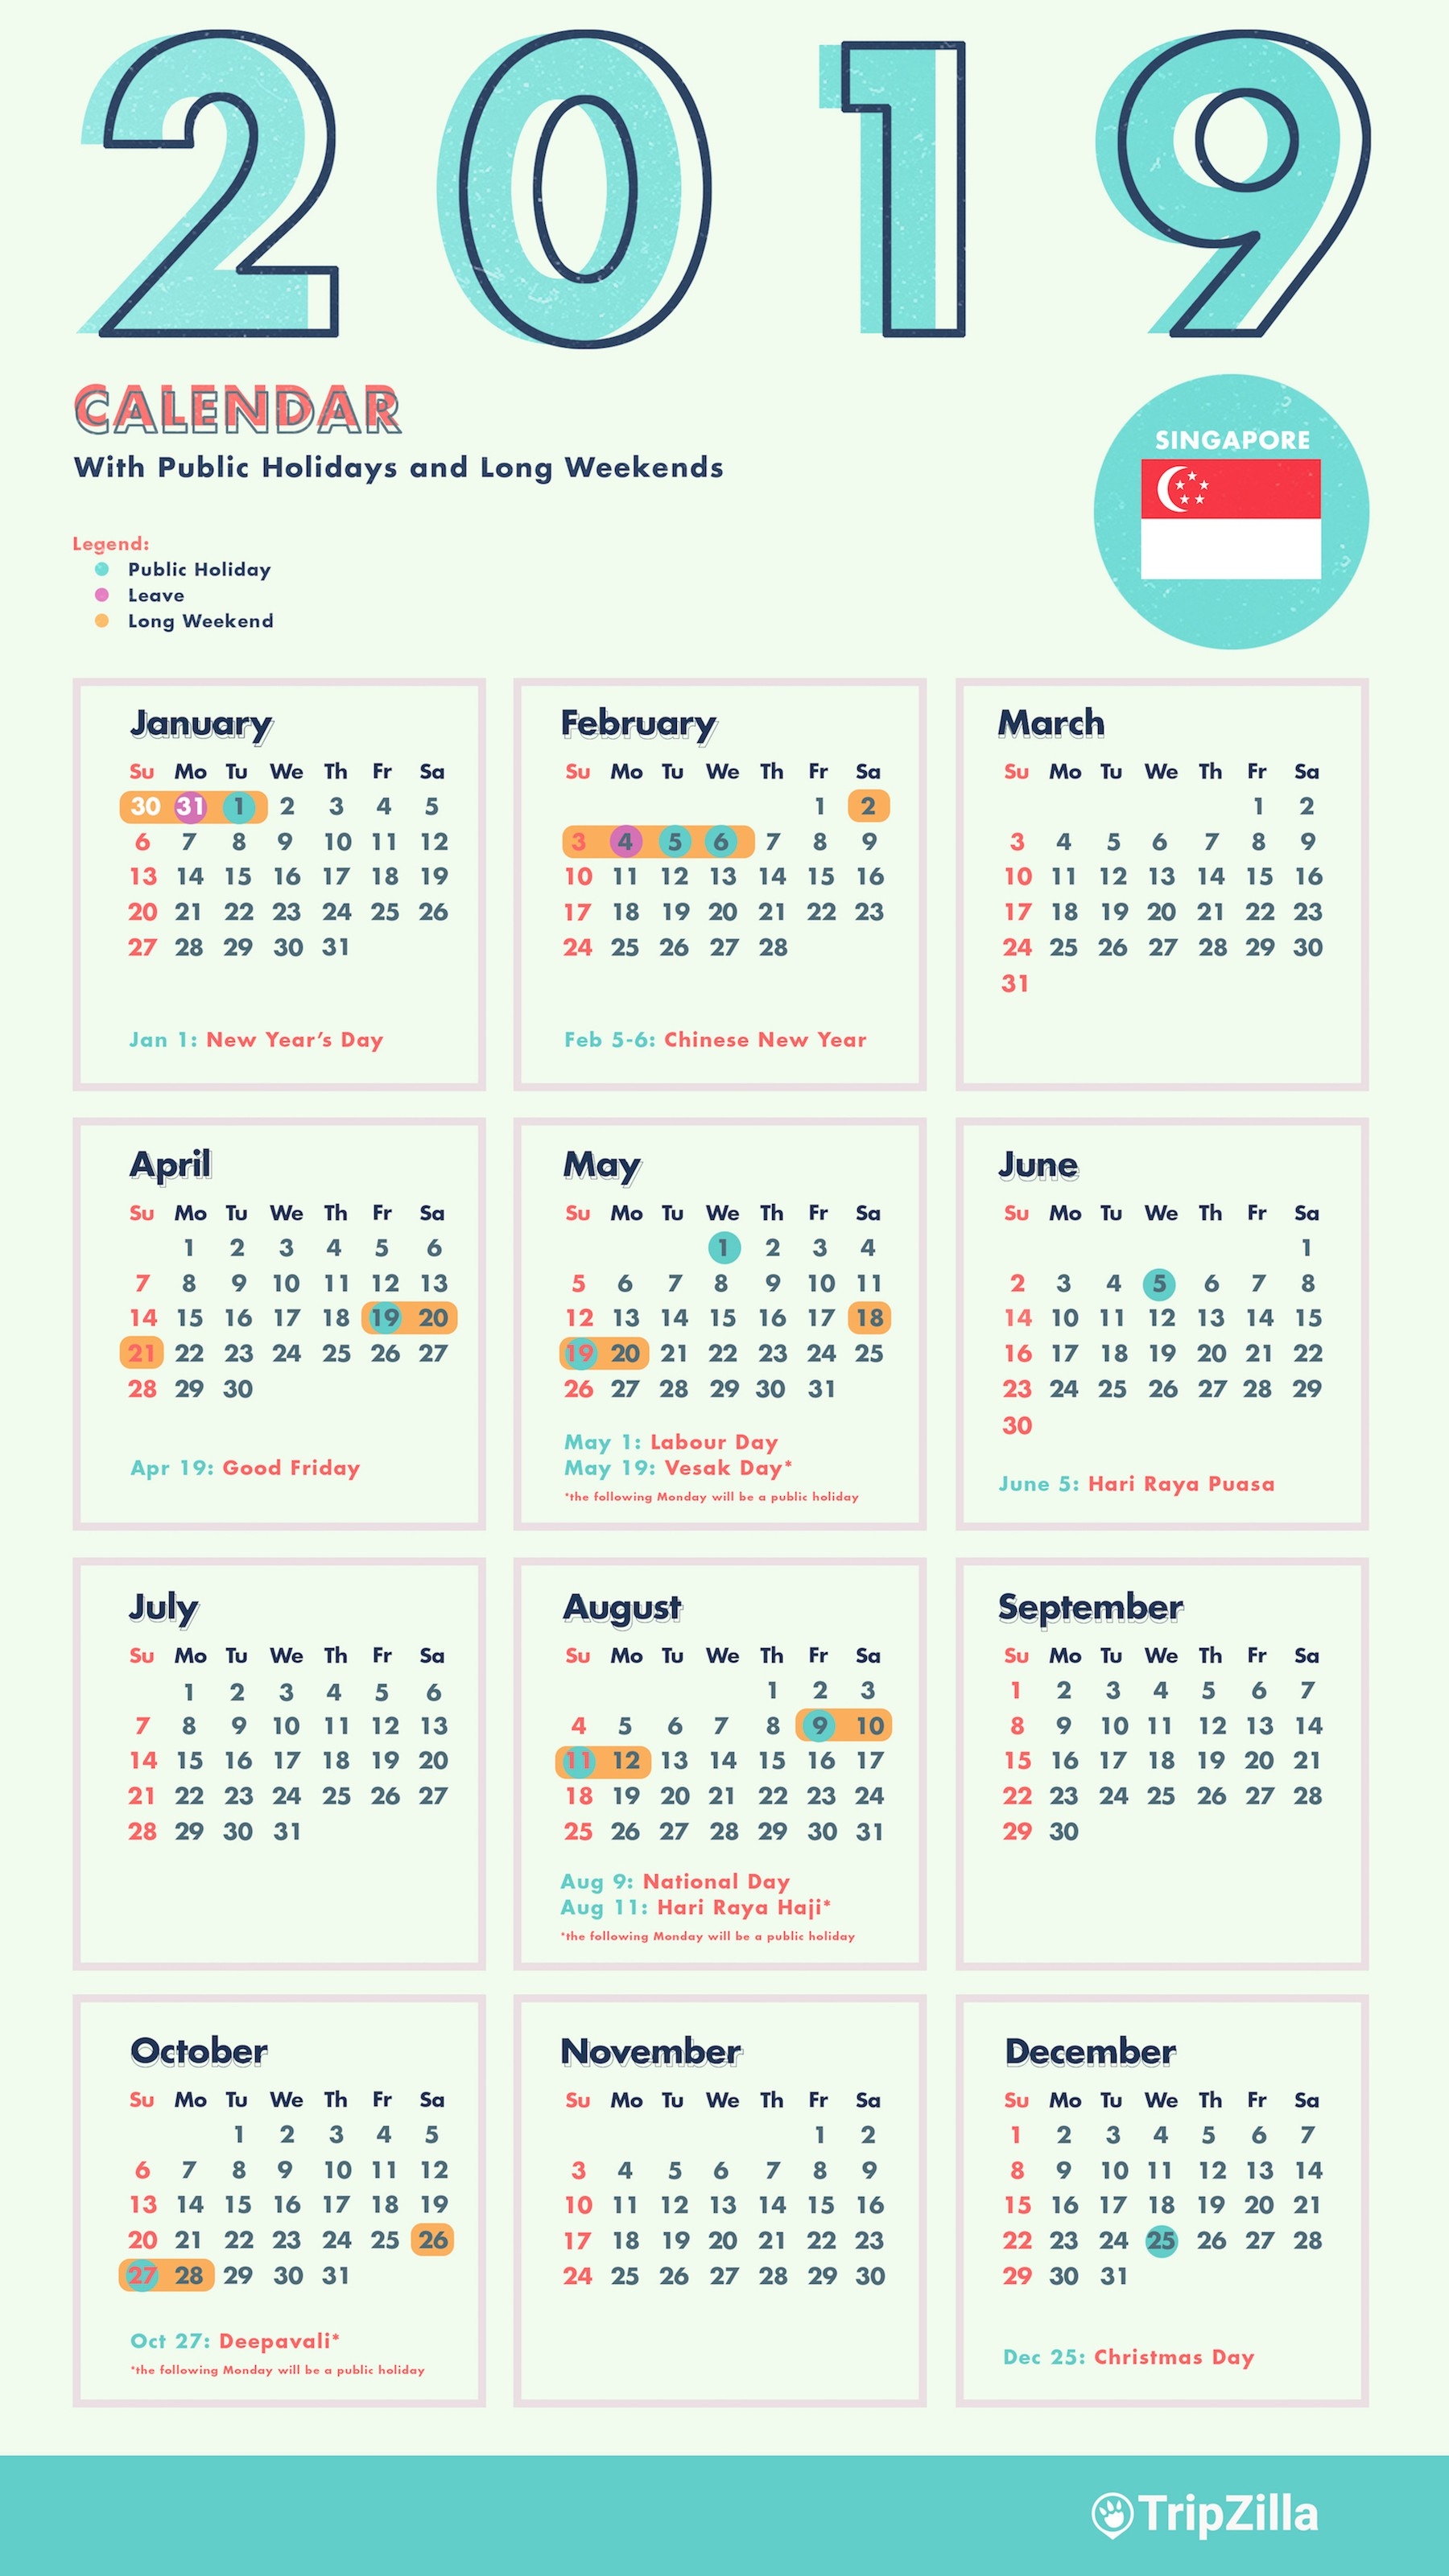 6 Long Weekends In Singapore In 2019 (Bonus Calendar-Calendar With Public Holidays